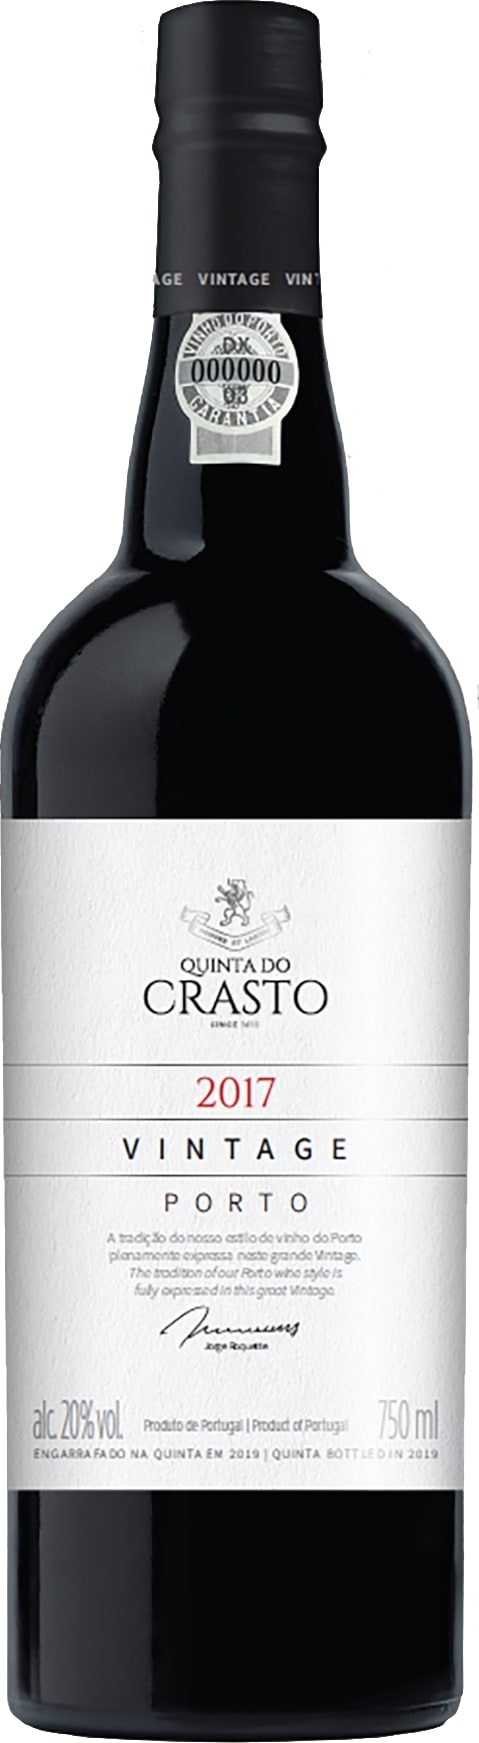 Quinta Do Crasto Vintage Port 2018 6x75cl - Just Wines 